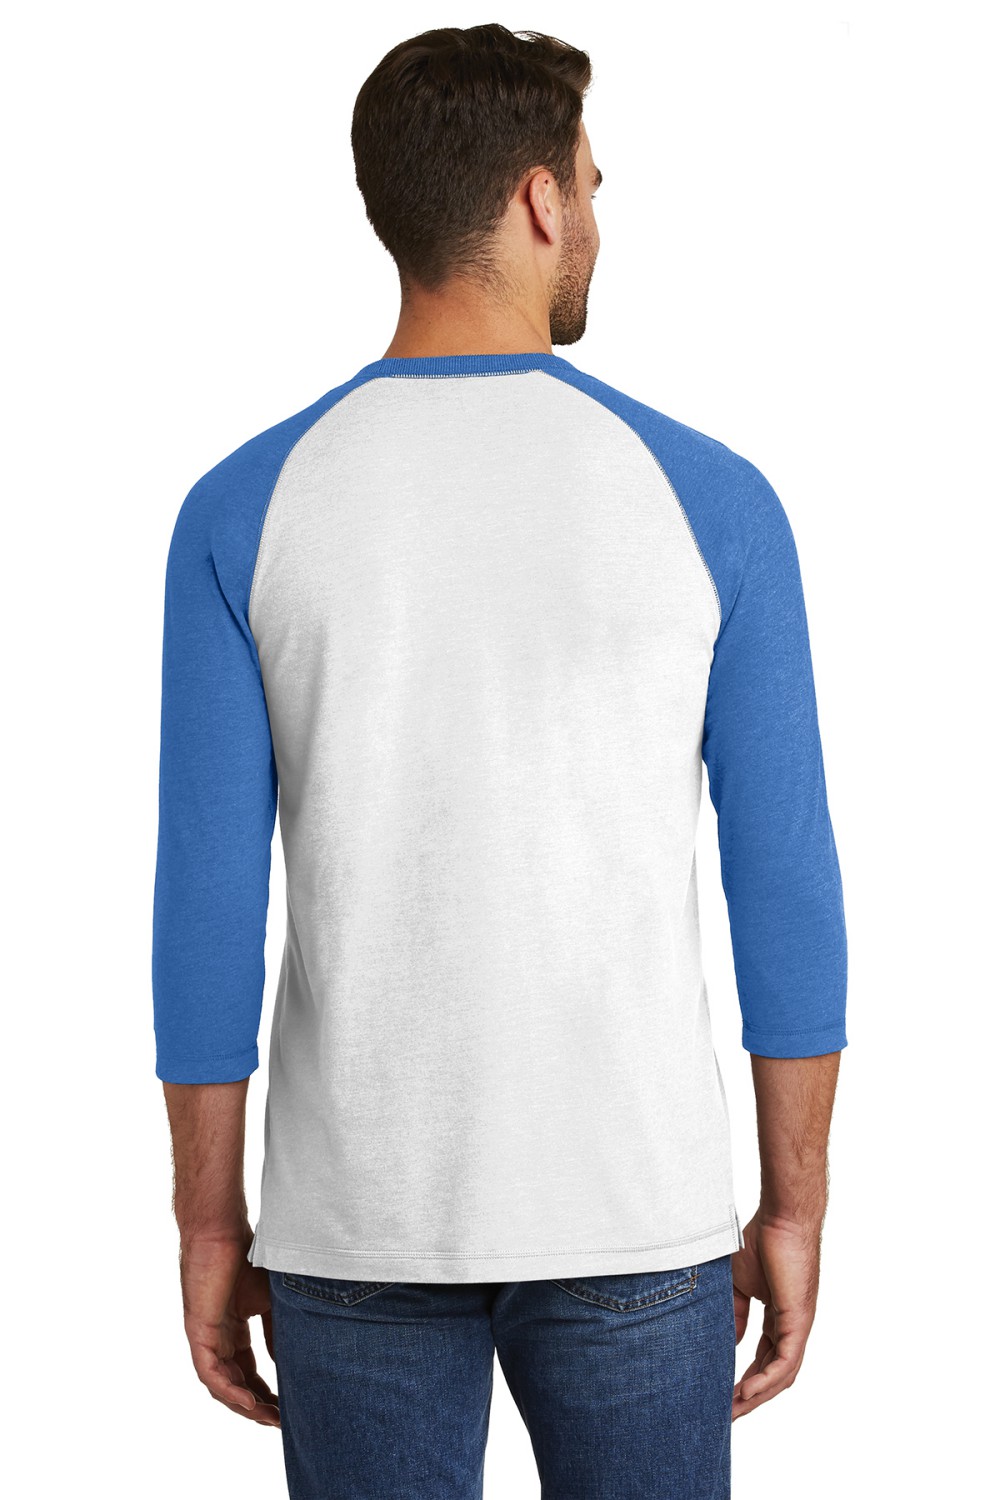 'New Era NEA121 Logo Embroidered Baseball Raglan T-Shirt '